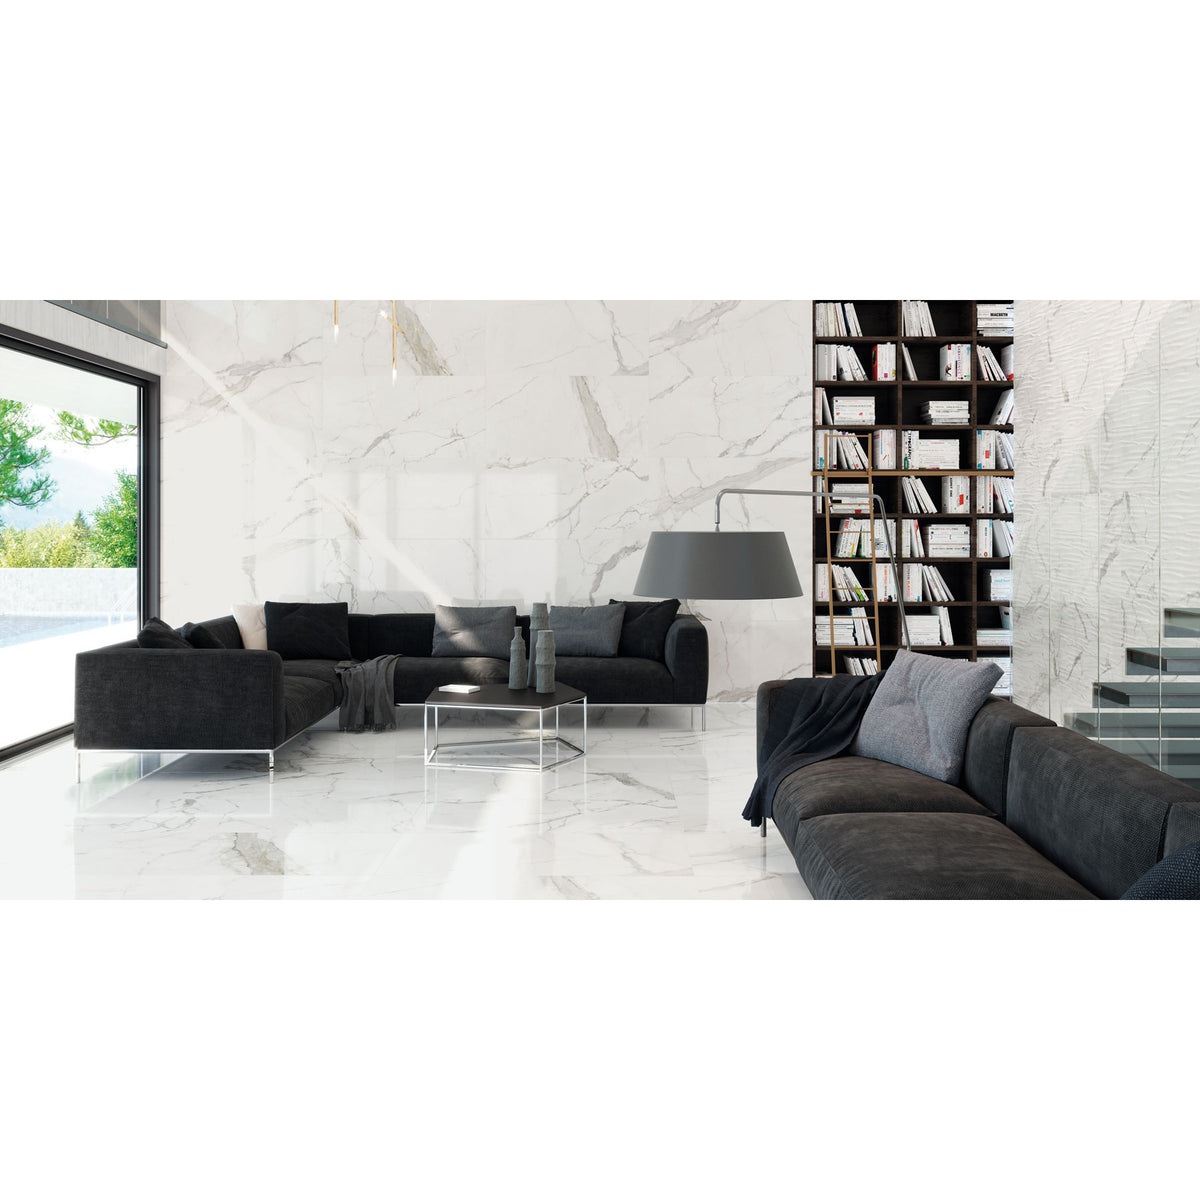 Happy Floors - Statuario 12 in. x 36 in. Rectified Porcelain Wall Tile - Installed